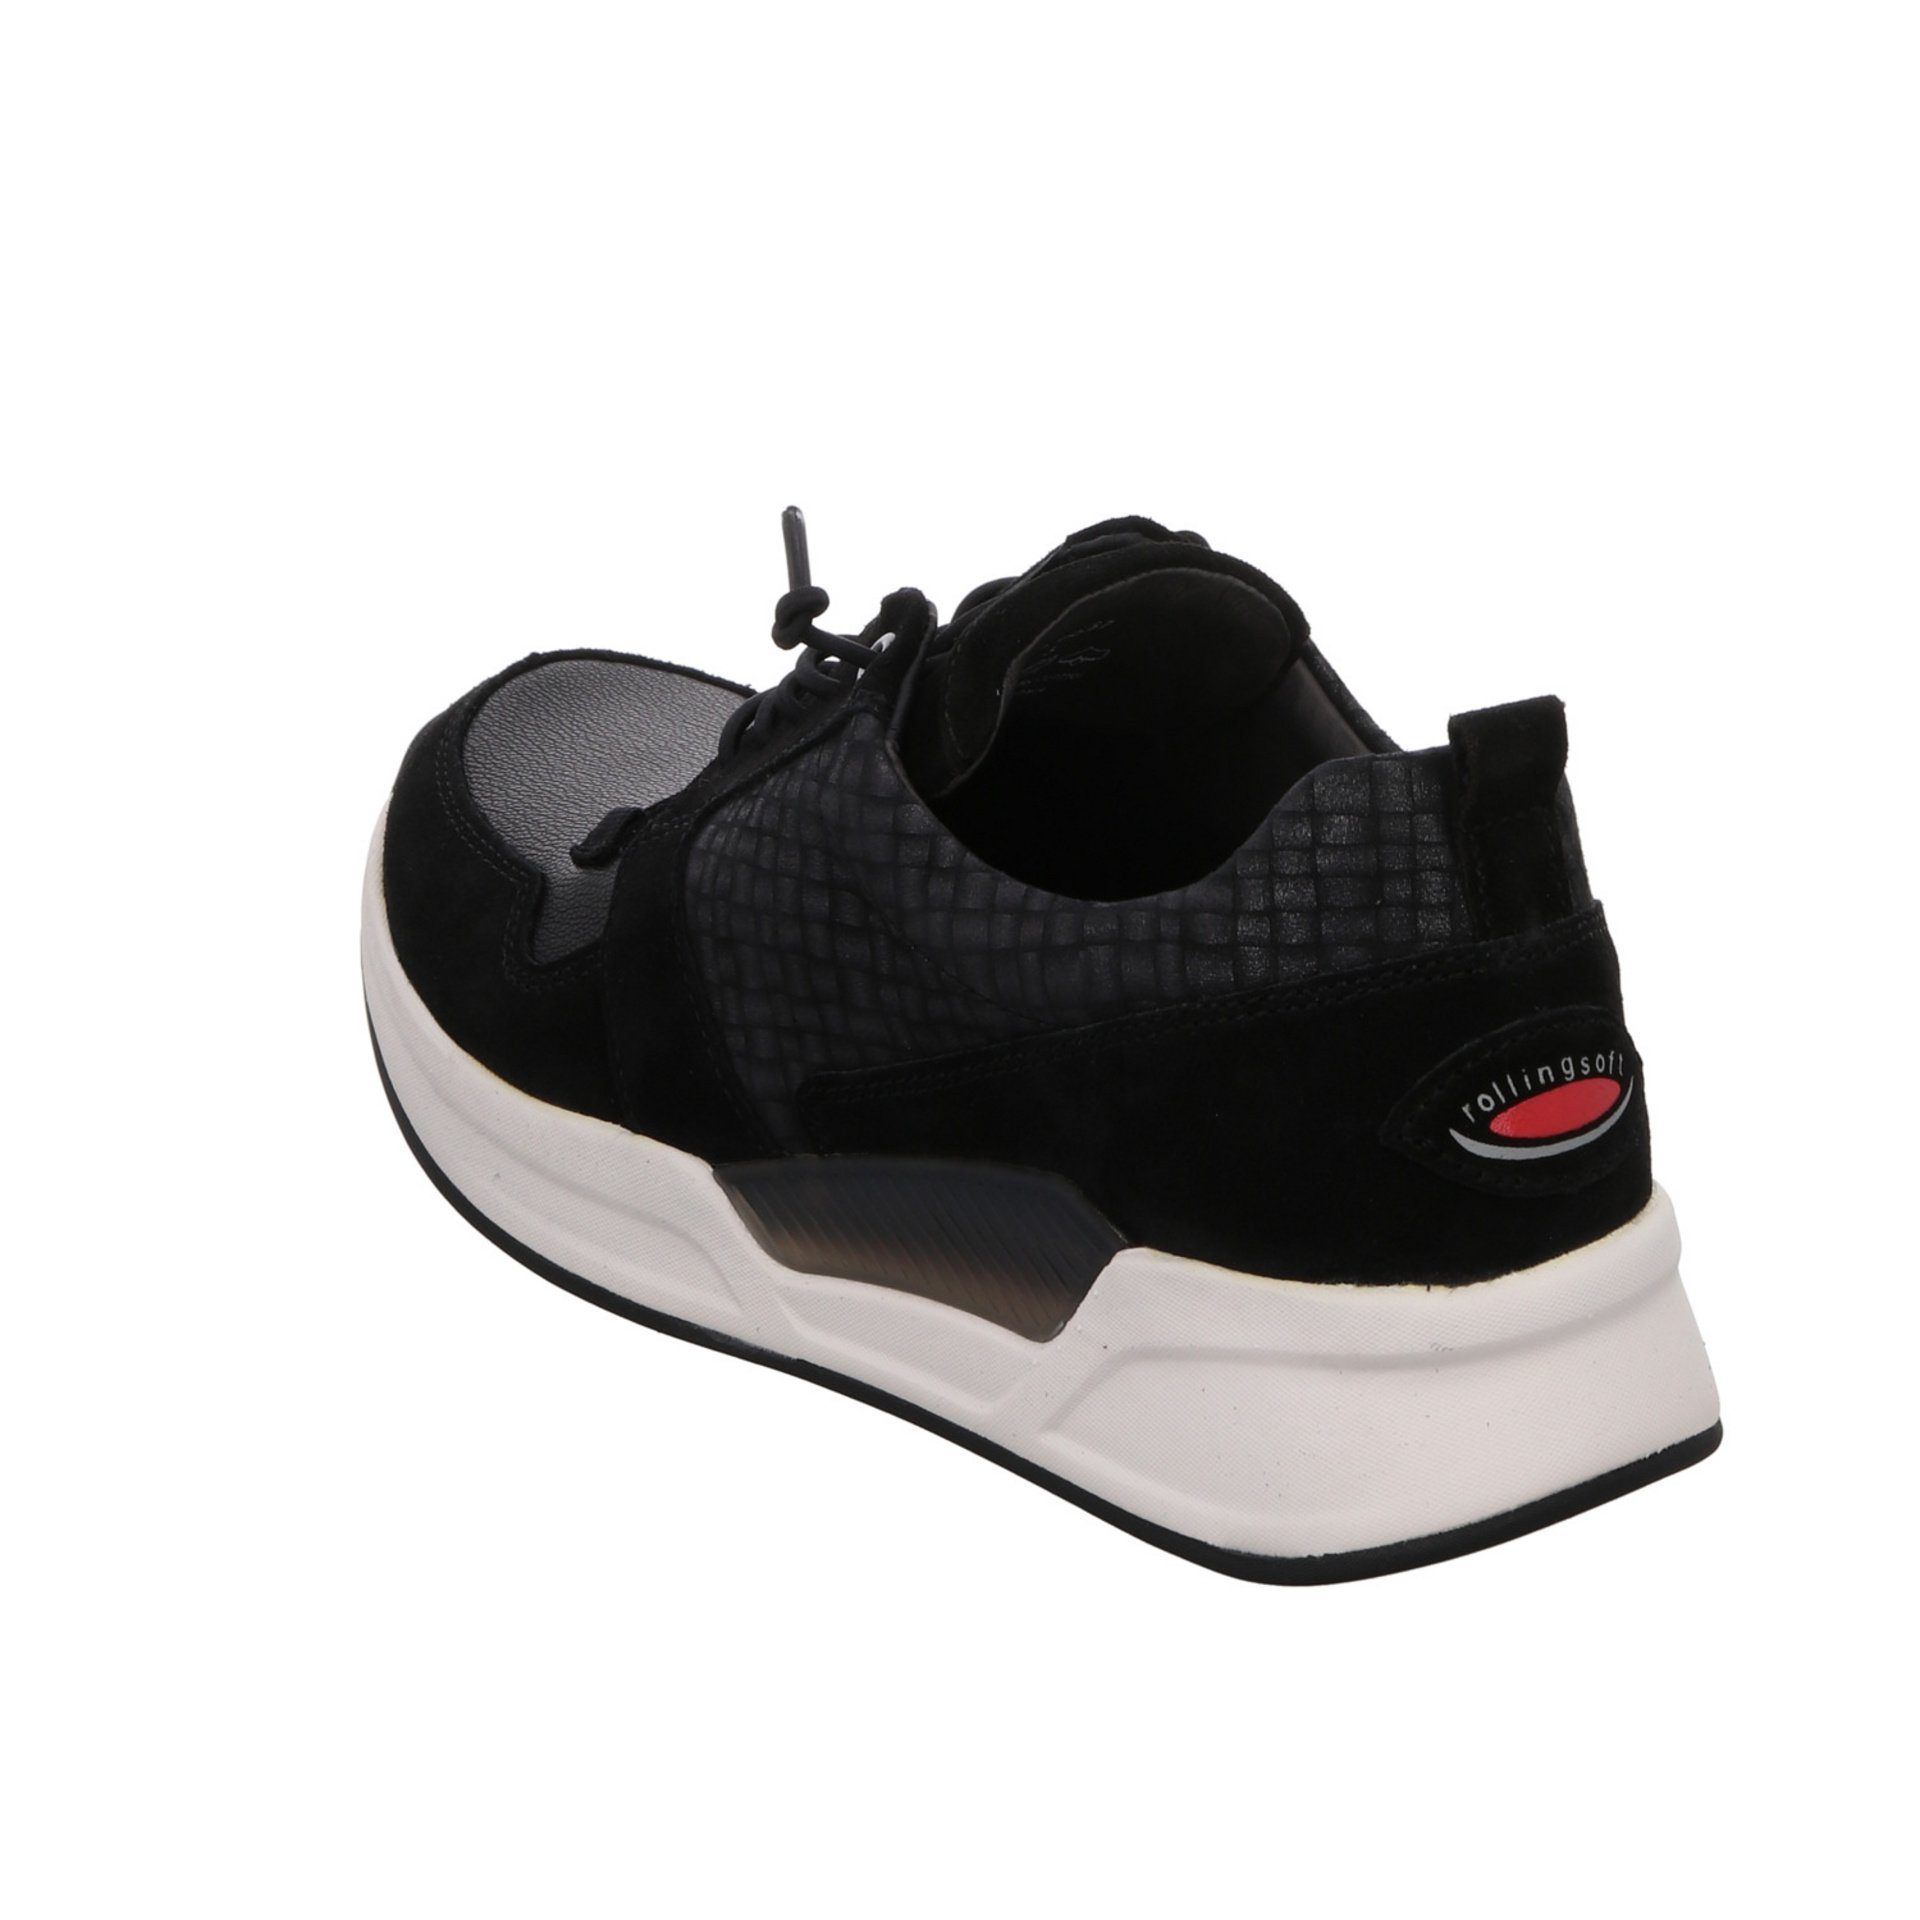 Gabor Damen Sneaker Schuhe Rollingsoft 87 Schnürschuh / schwarz Sneaker Lederkombination